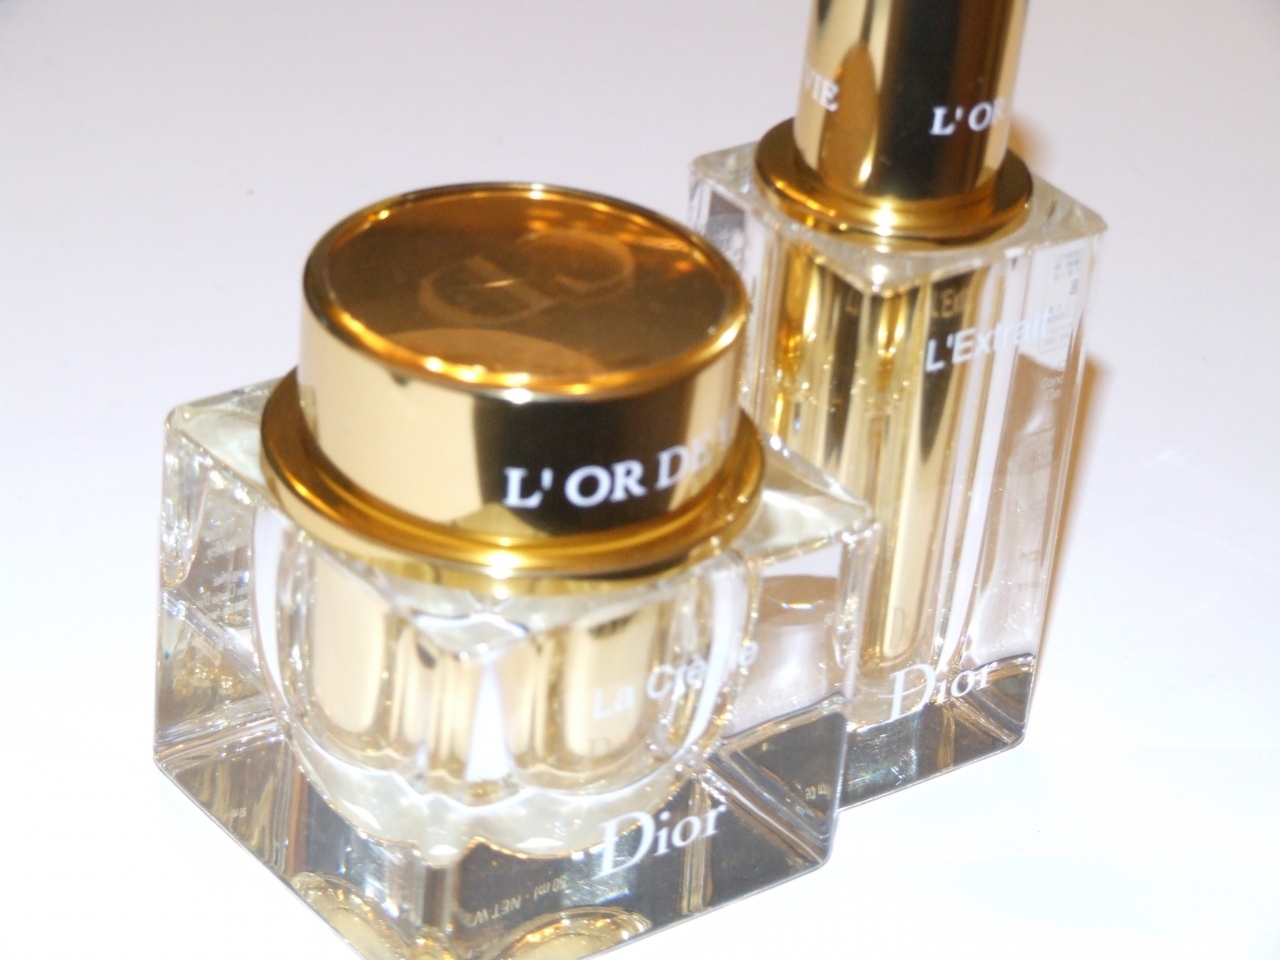 『Dior L'Or DE Vie La Creme （ディオール オー・ド・ヴィ クレーム） を使ってみました。』大阪の旅行記・ブログ by